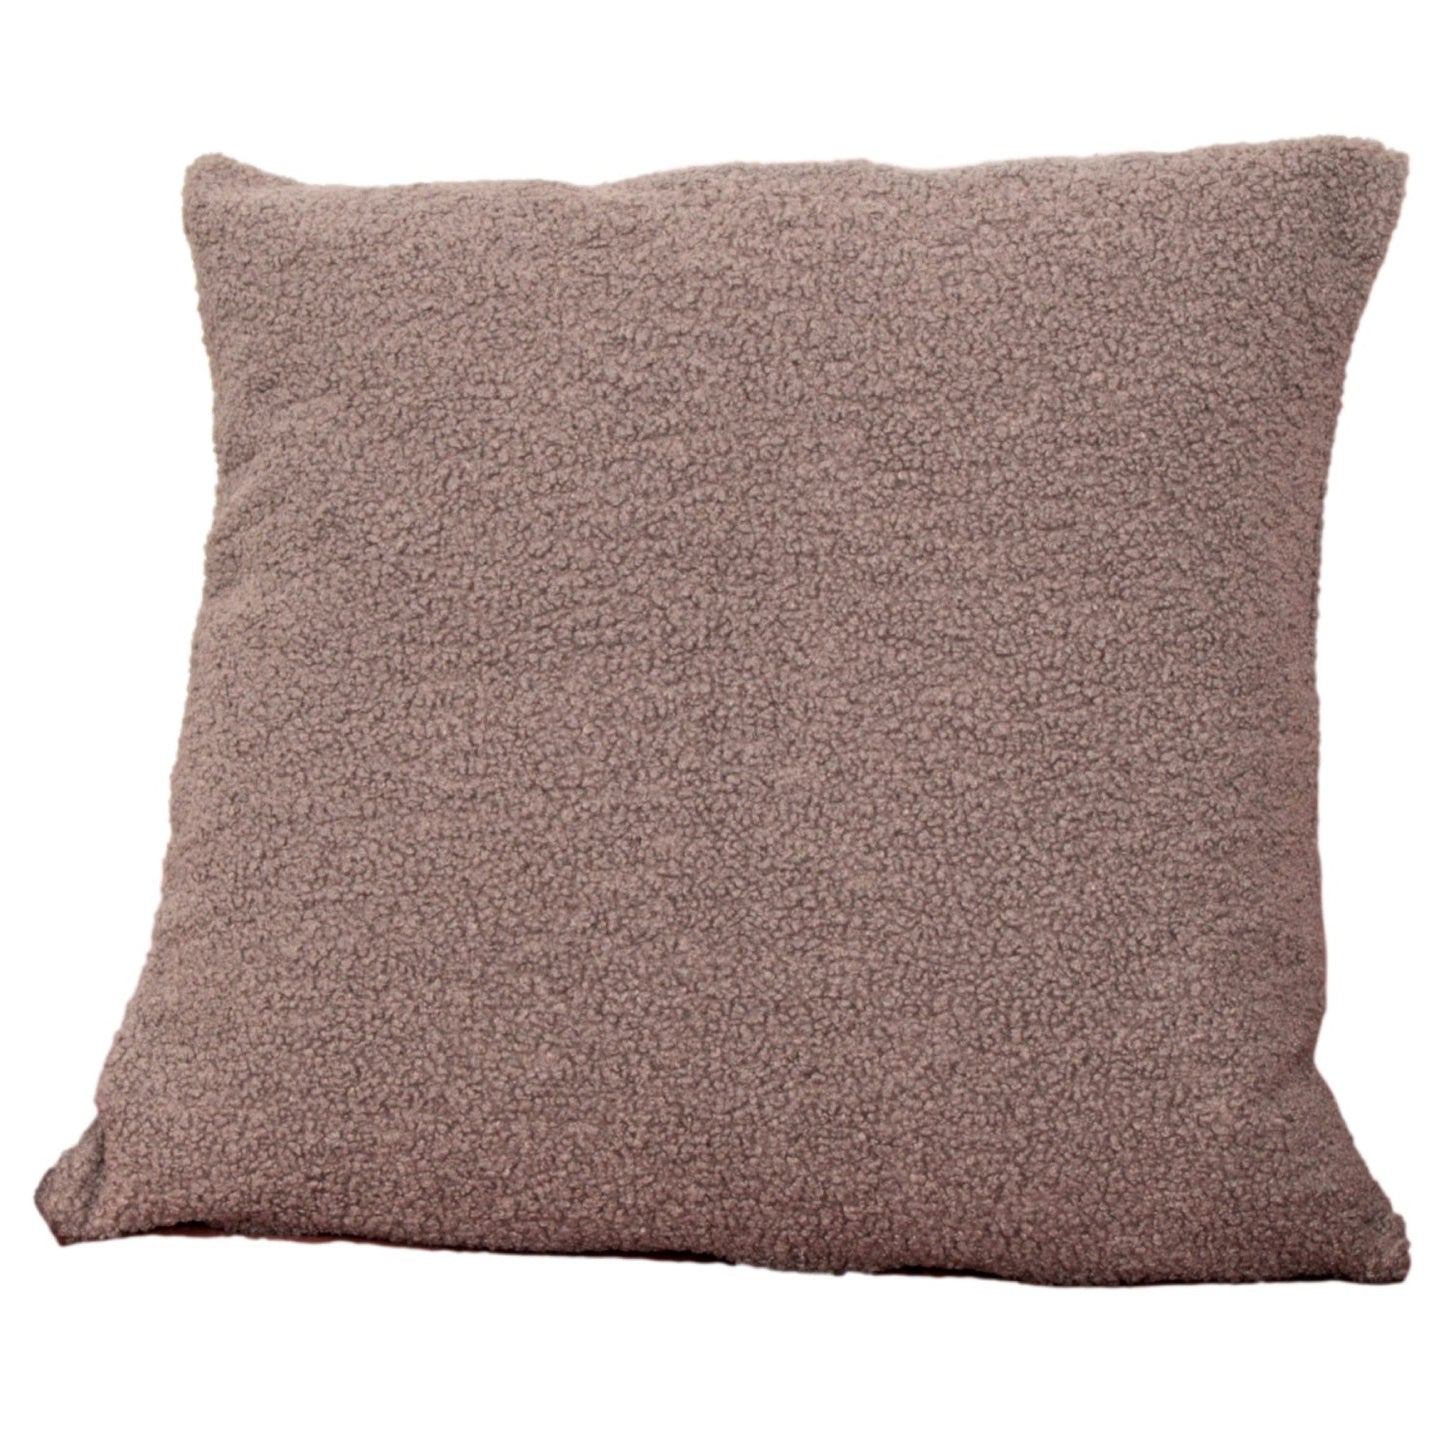 Grey teddy cushion cover by Native